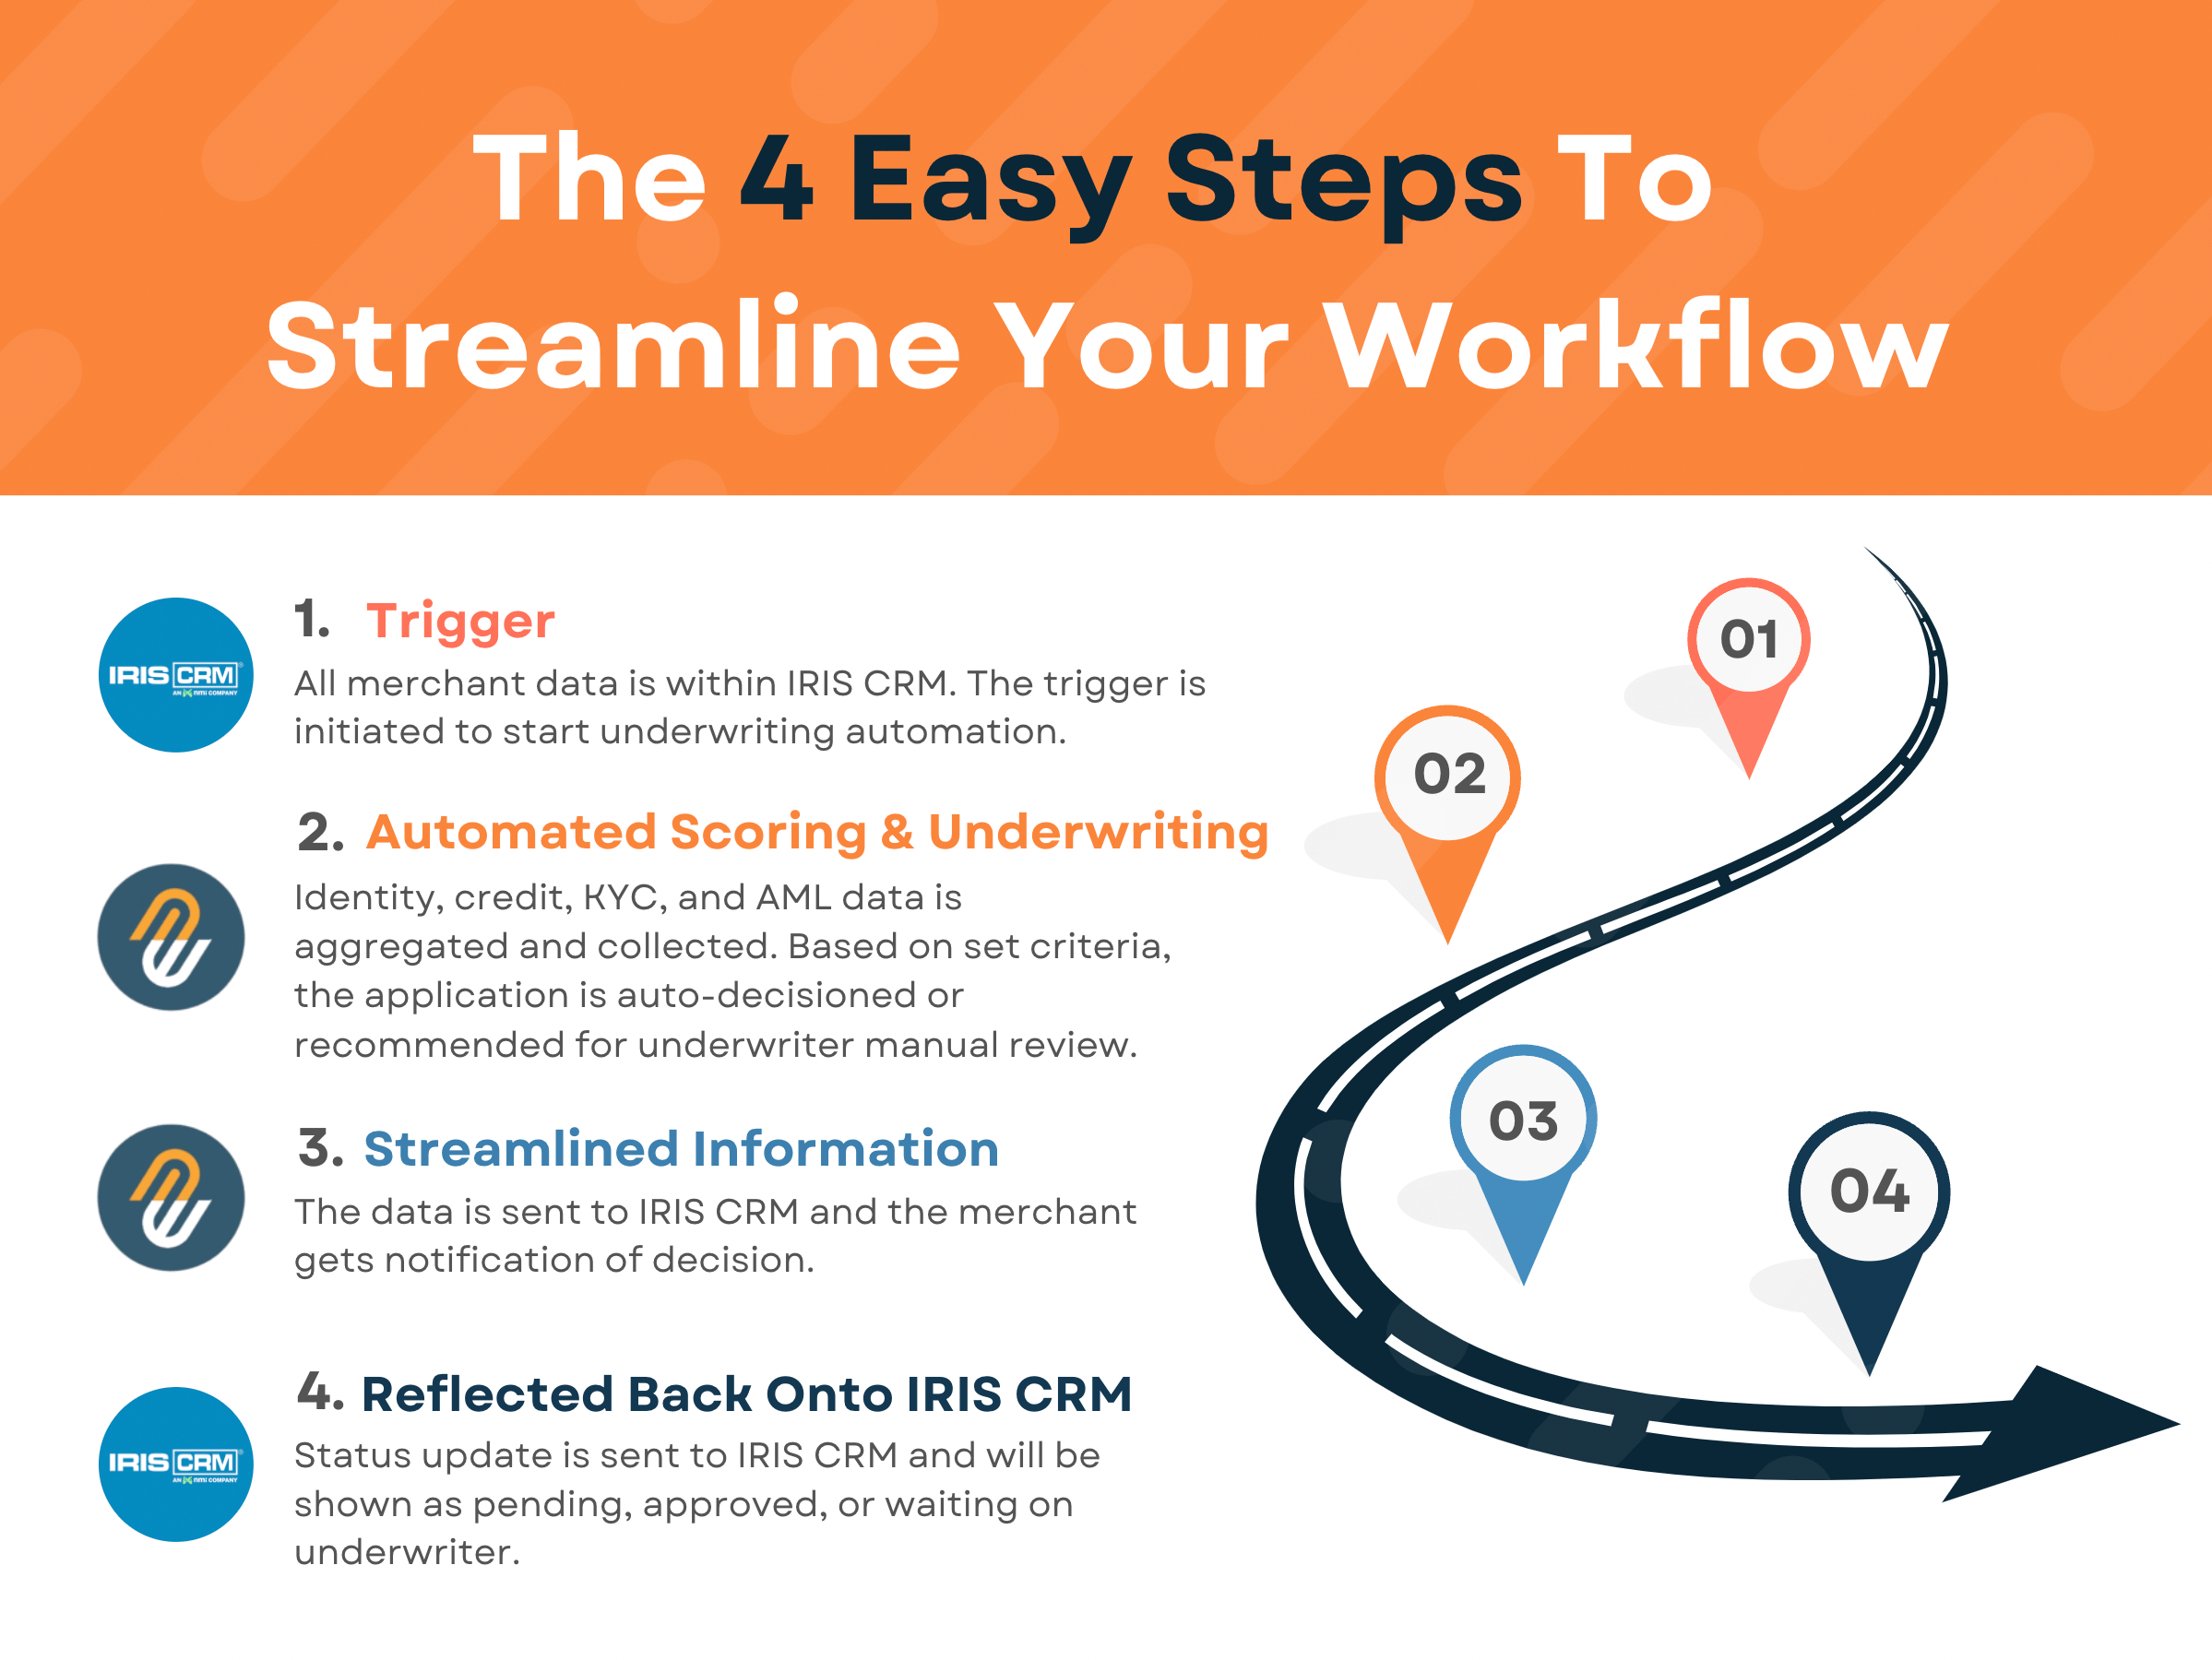 Streamline your underwriting and merchant data management workflows